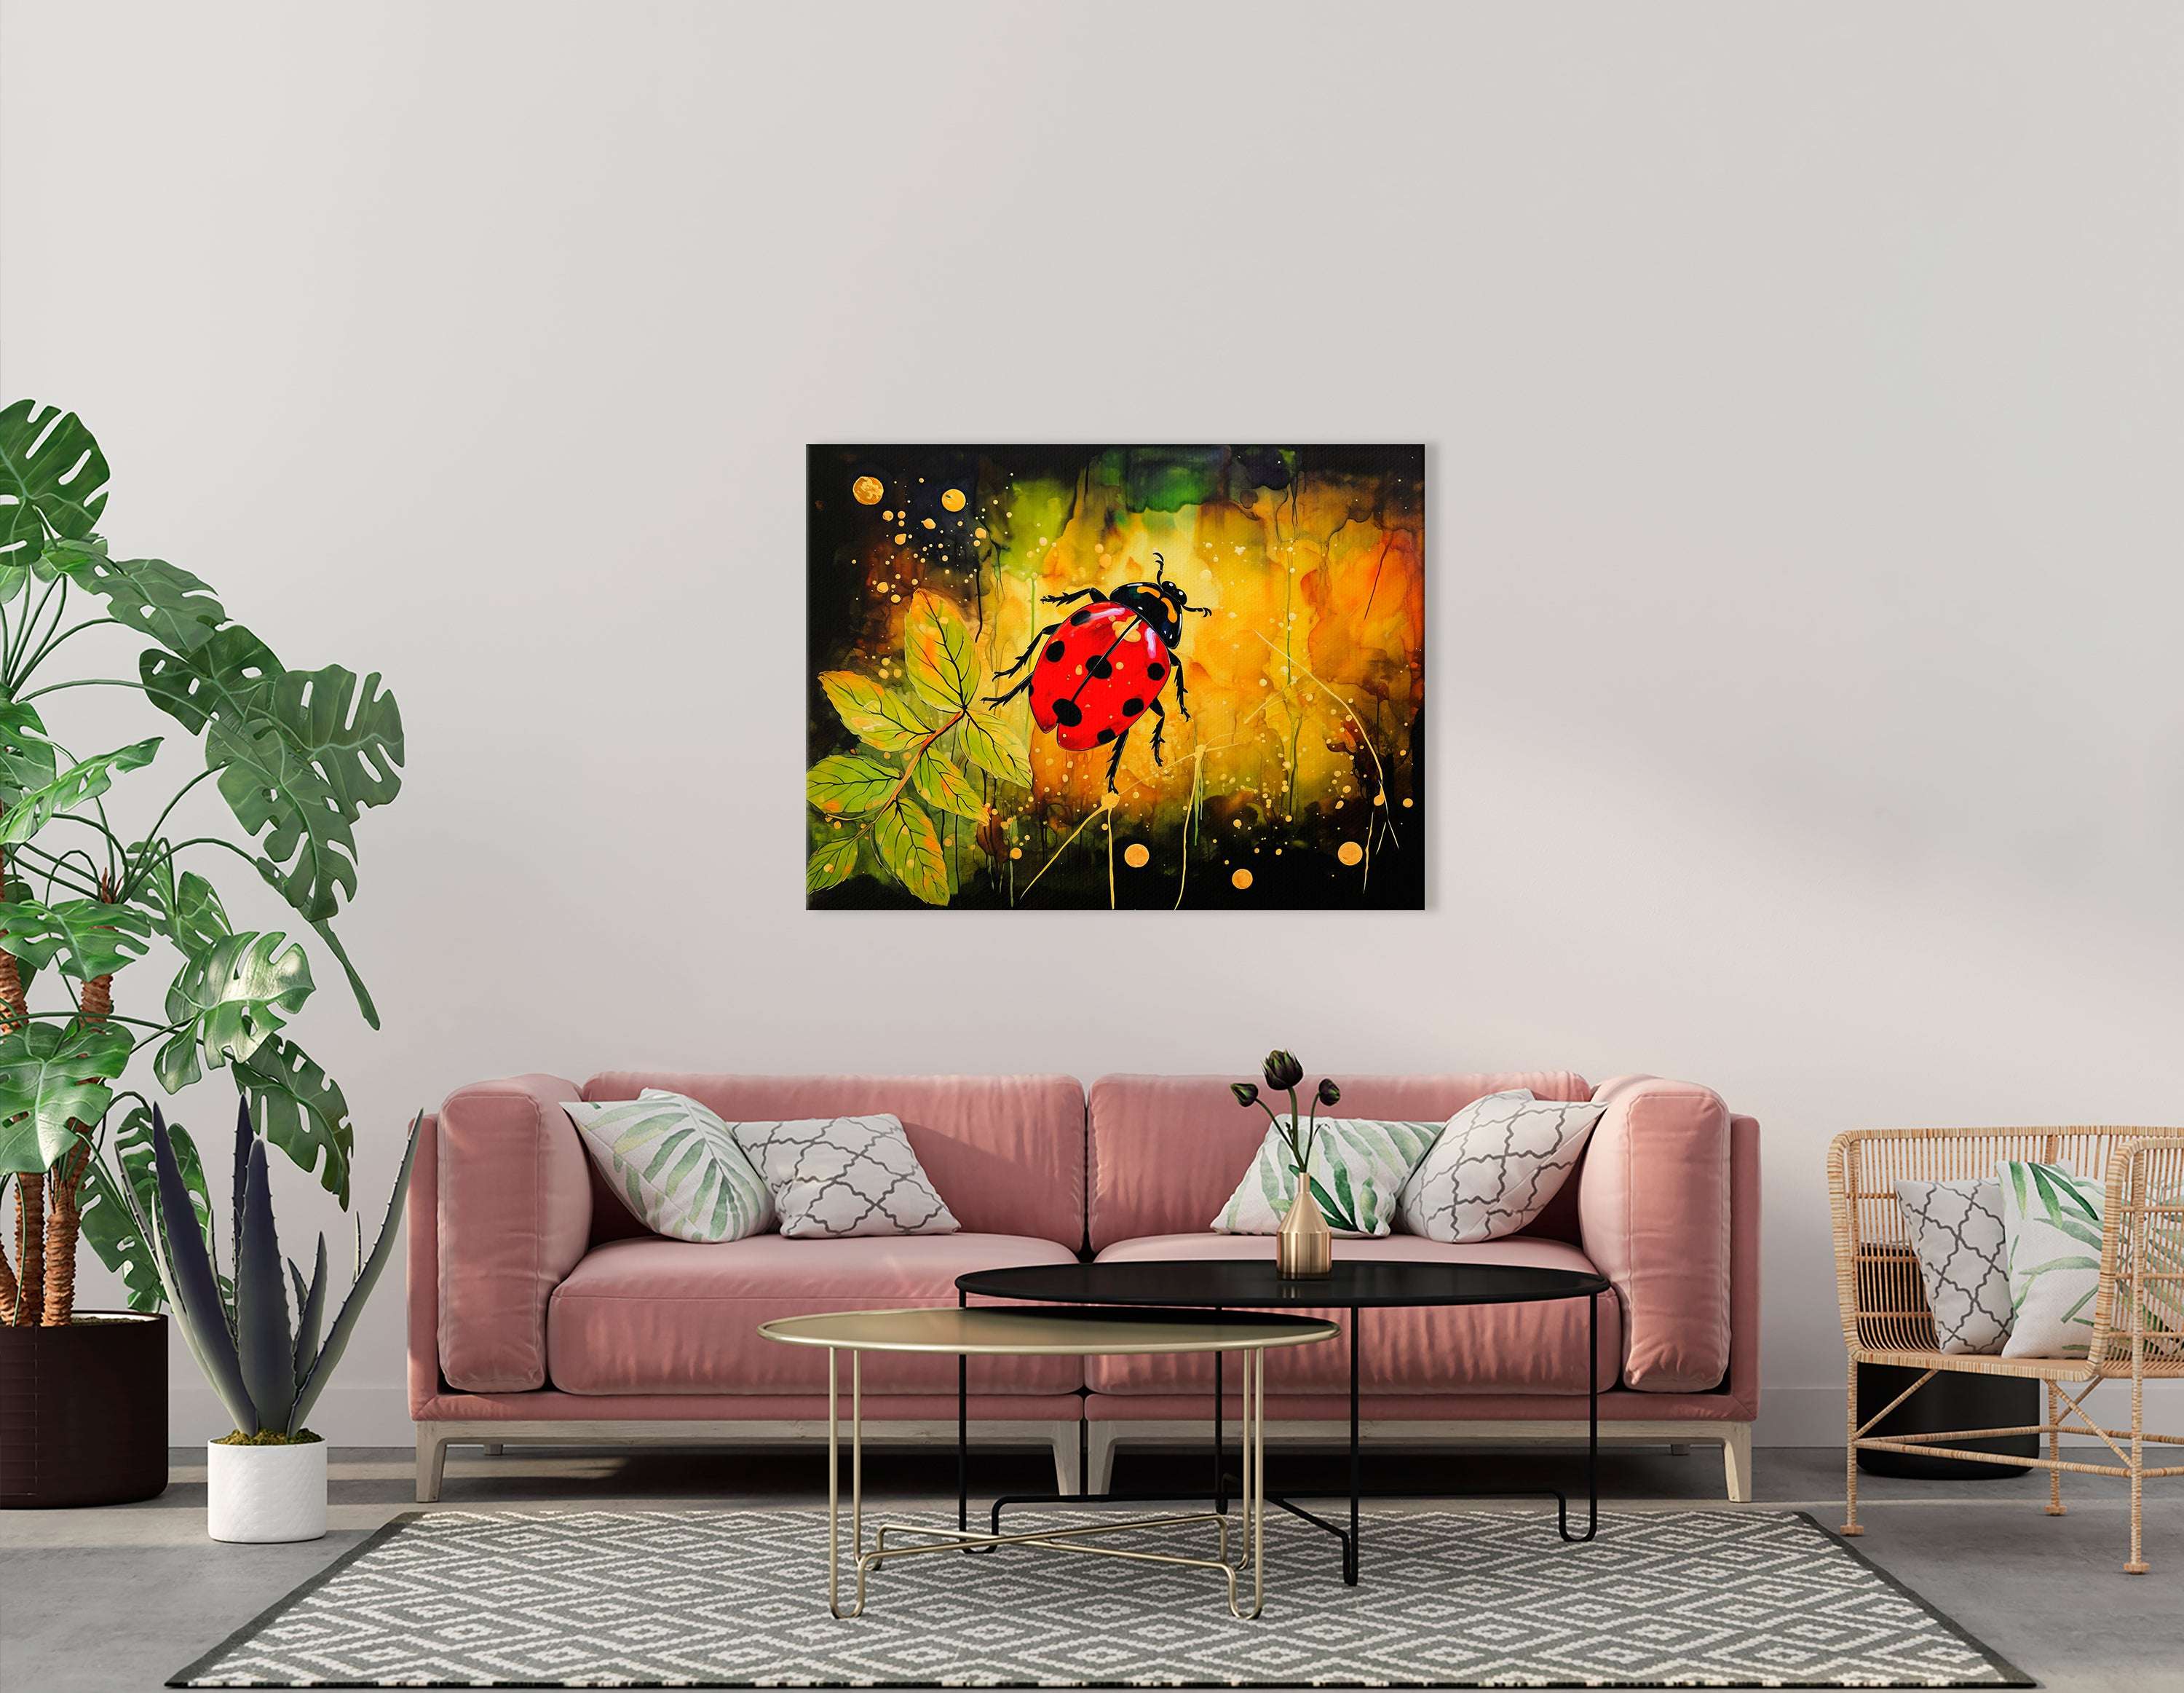 Surrealistic Ladybug on Dark Background - Canvas Print - Artoholica Ready to Hang Canvas Print